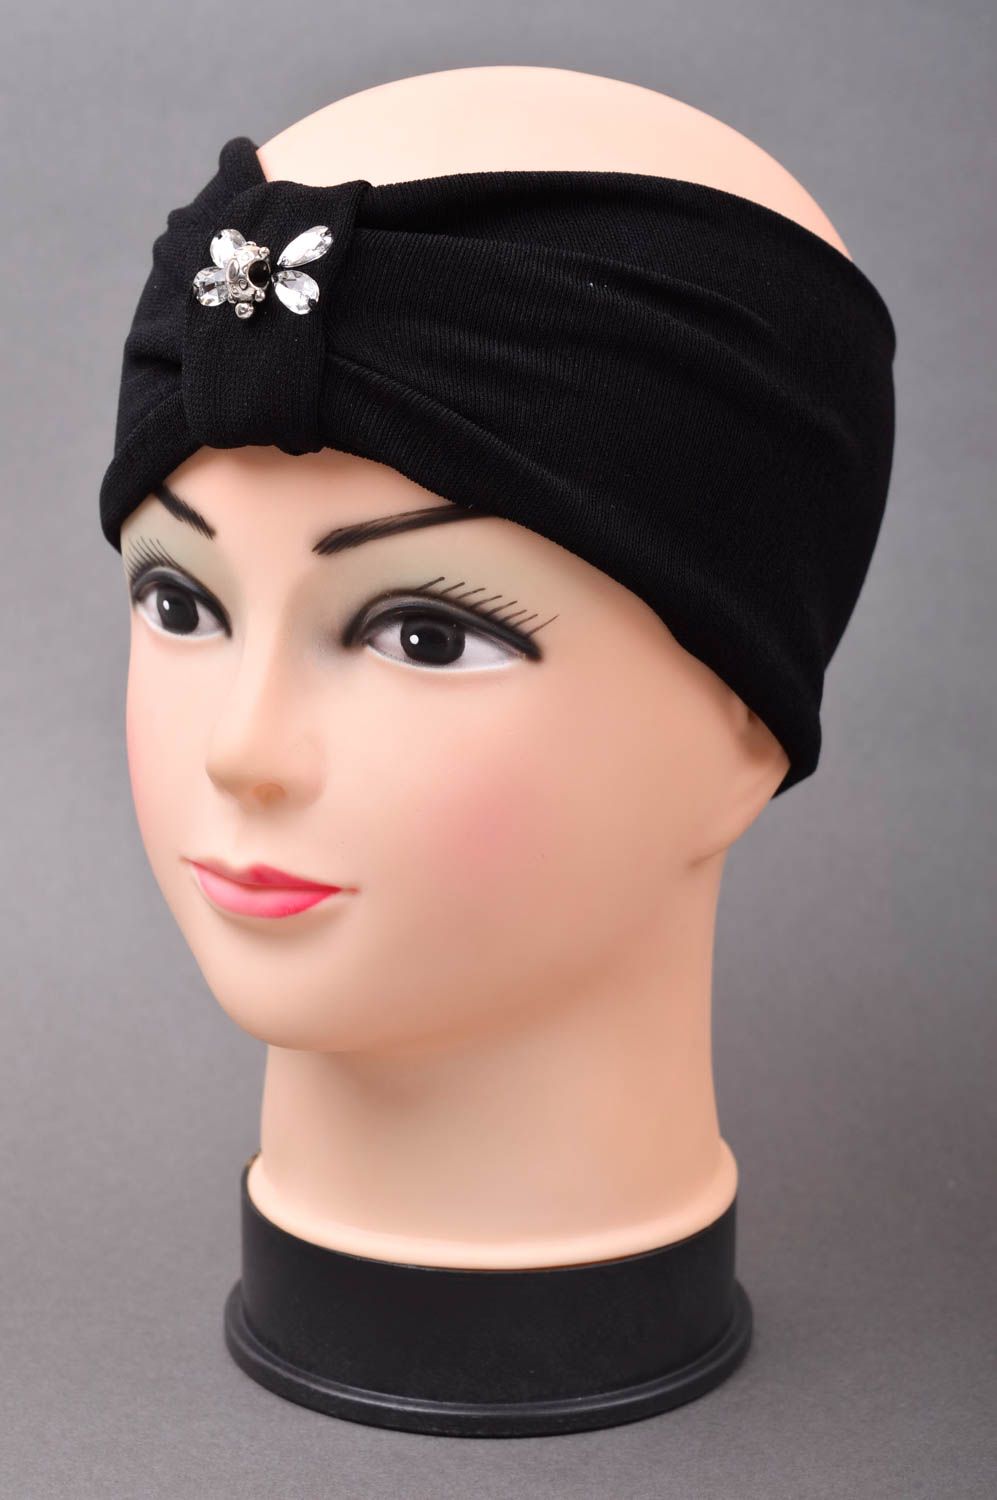 Beautiful handmade turban head accessories designer hair accessories for girls photo 1